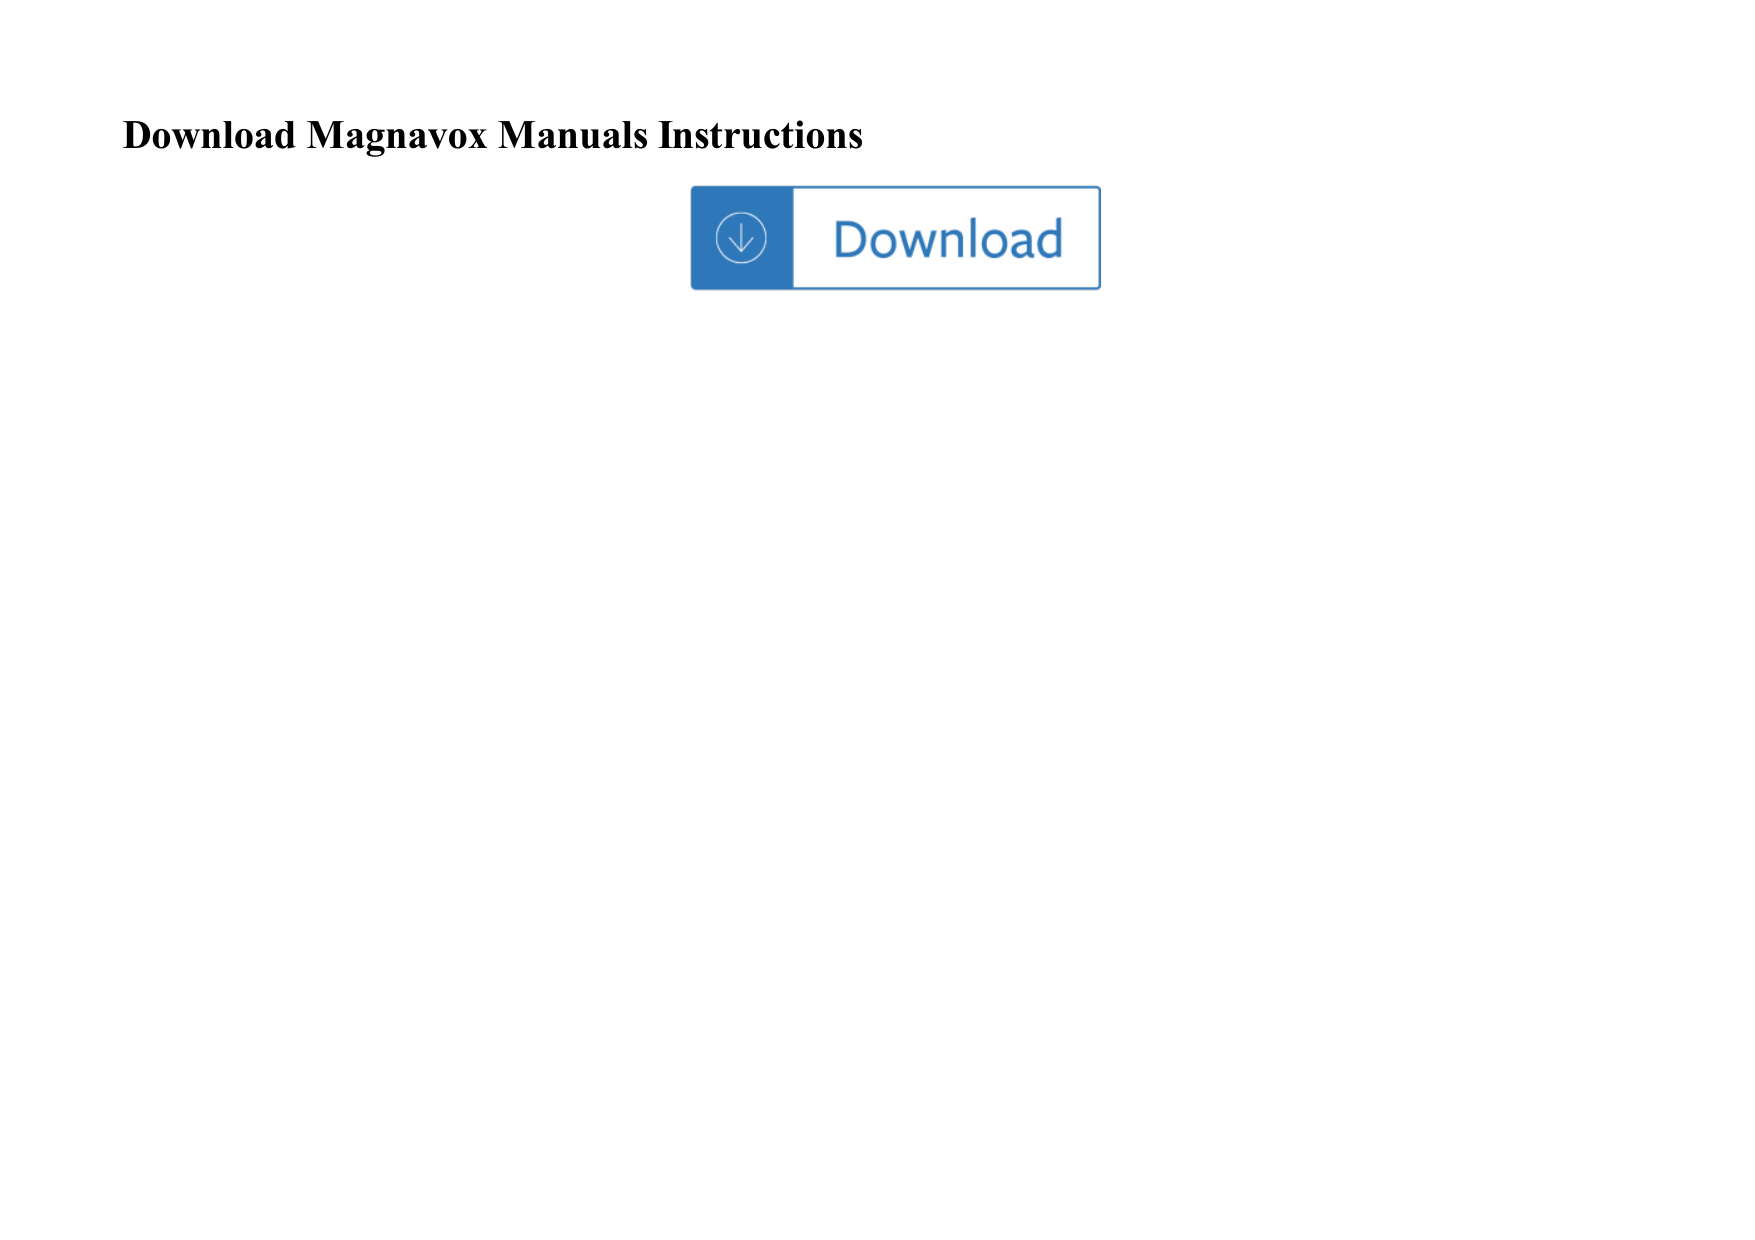 Page 1 of 2 - Magnavox Manuals Instructions Magnavox-manuals-instructions